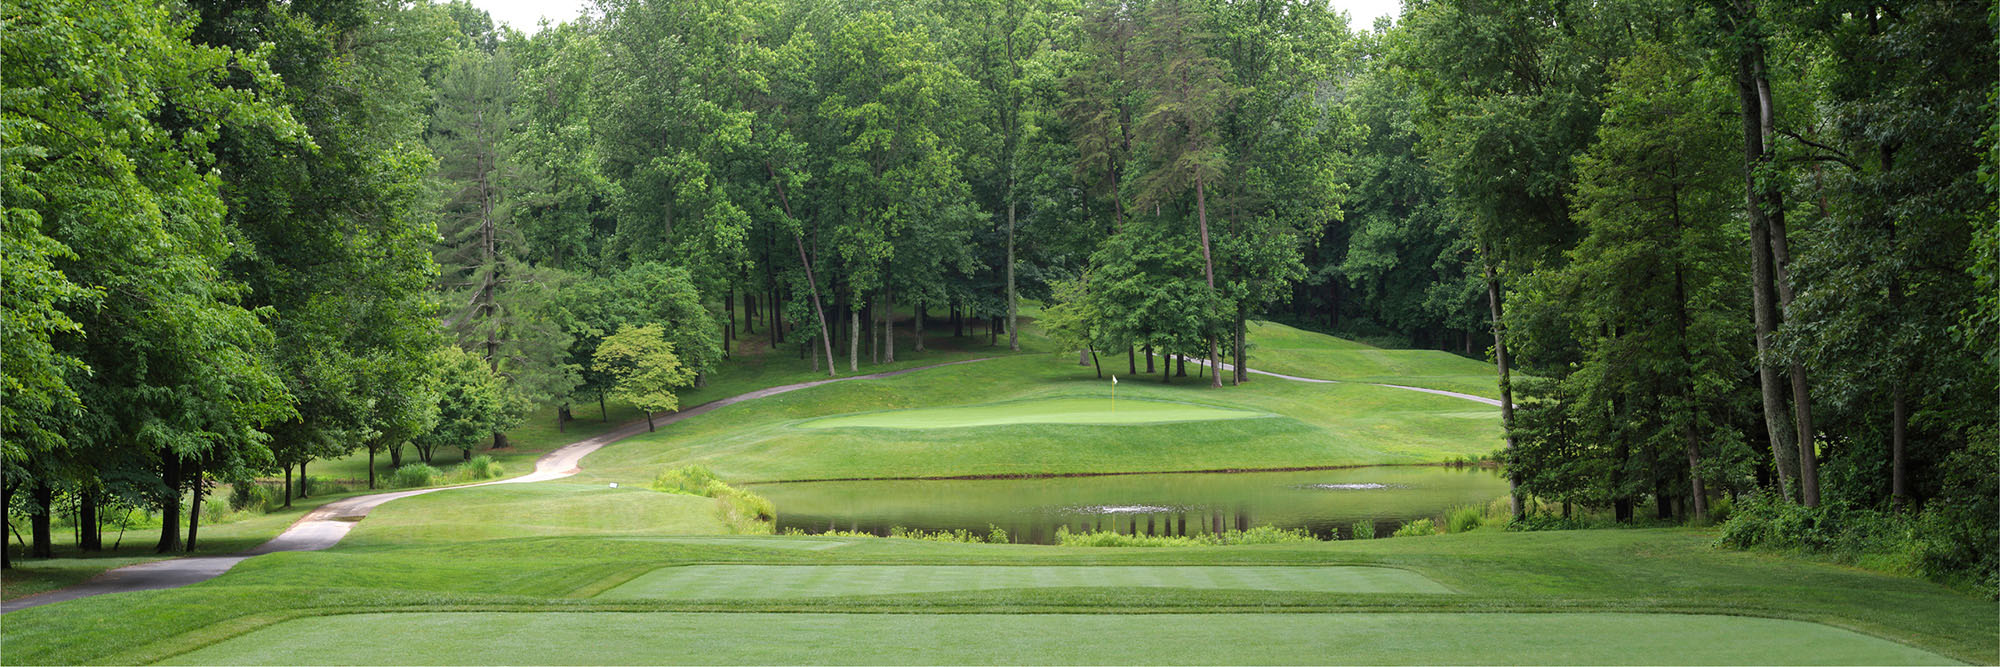 Golf Course Image - Congressional Gold No. 11